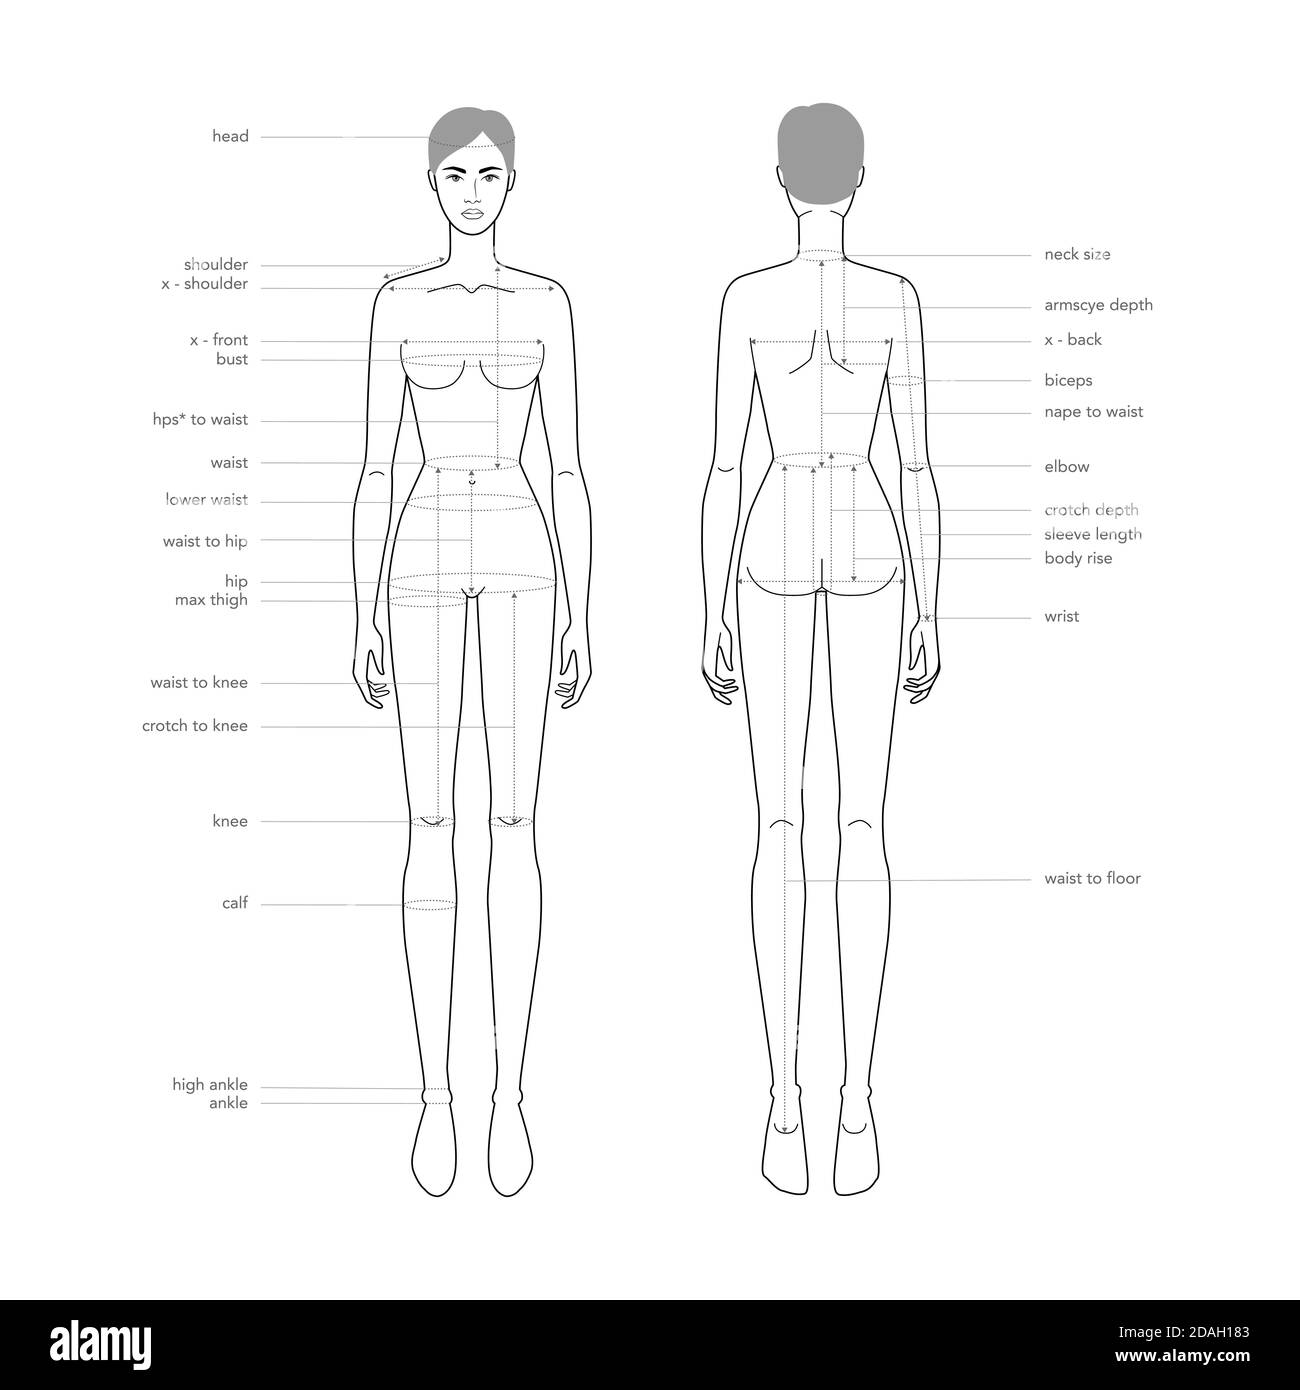 Female Body Measurement Chart, Template.net